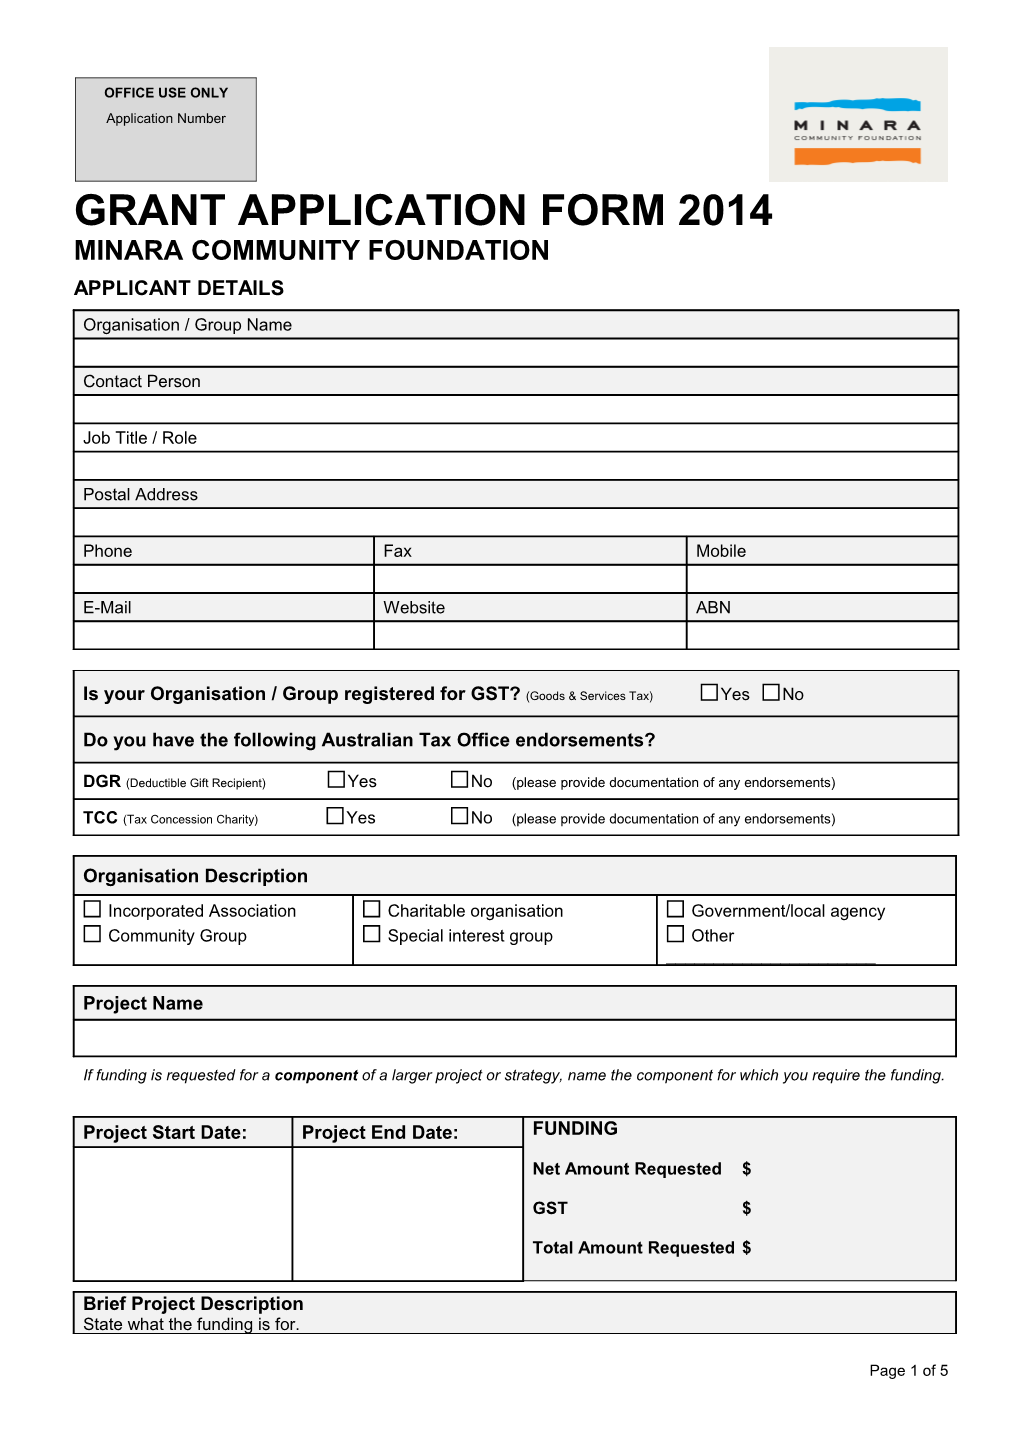 Grant Application Form 2014